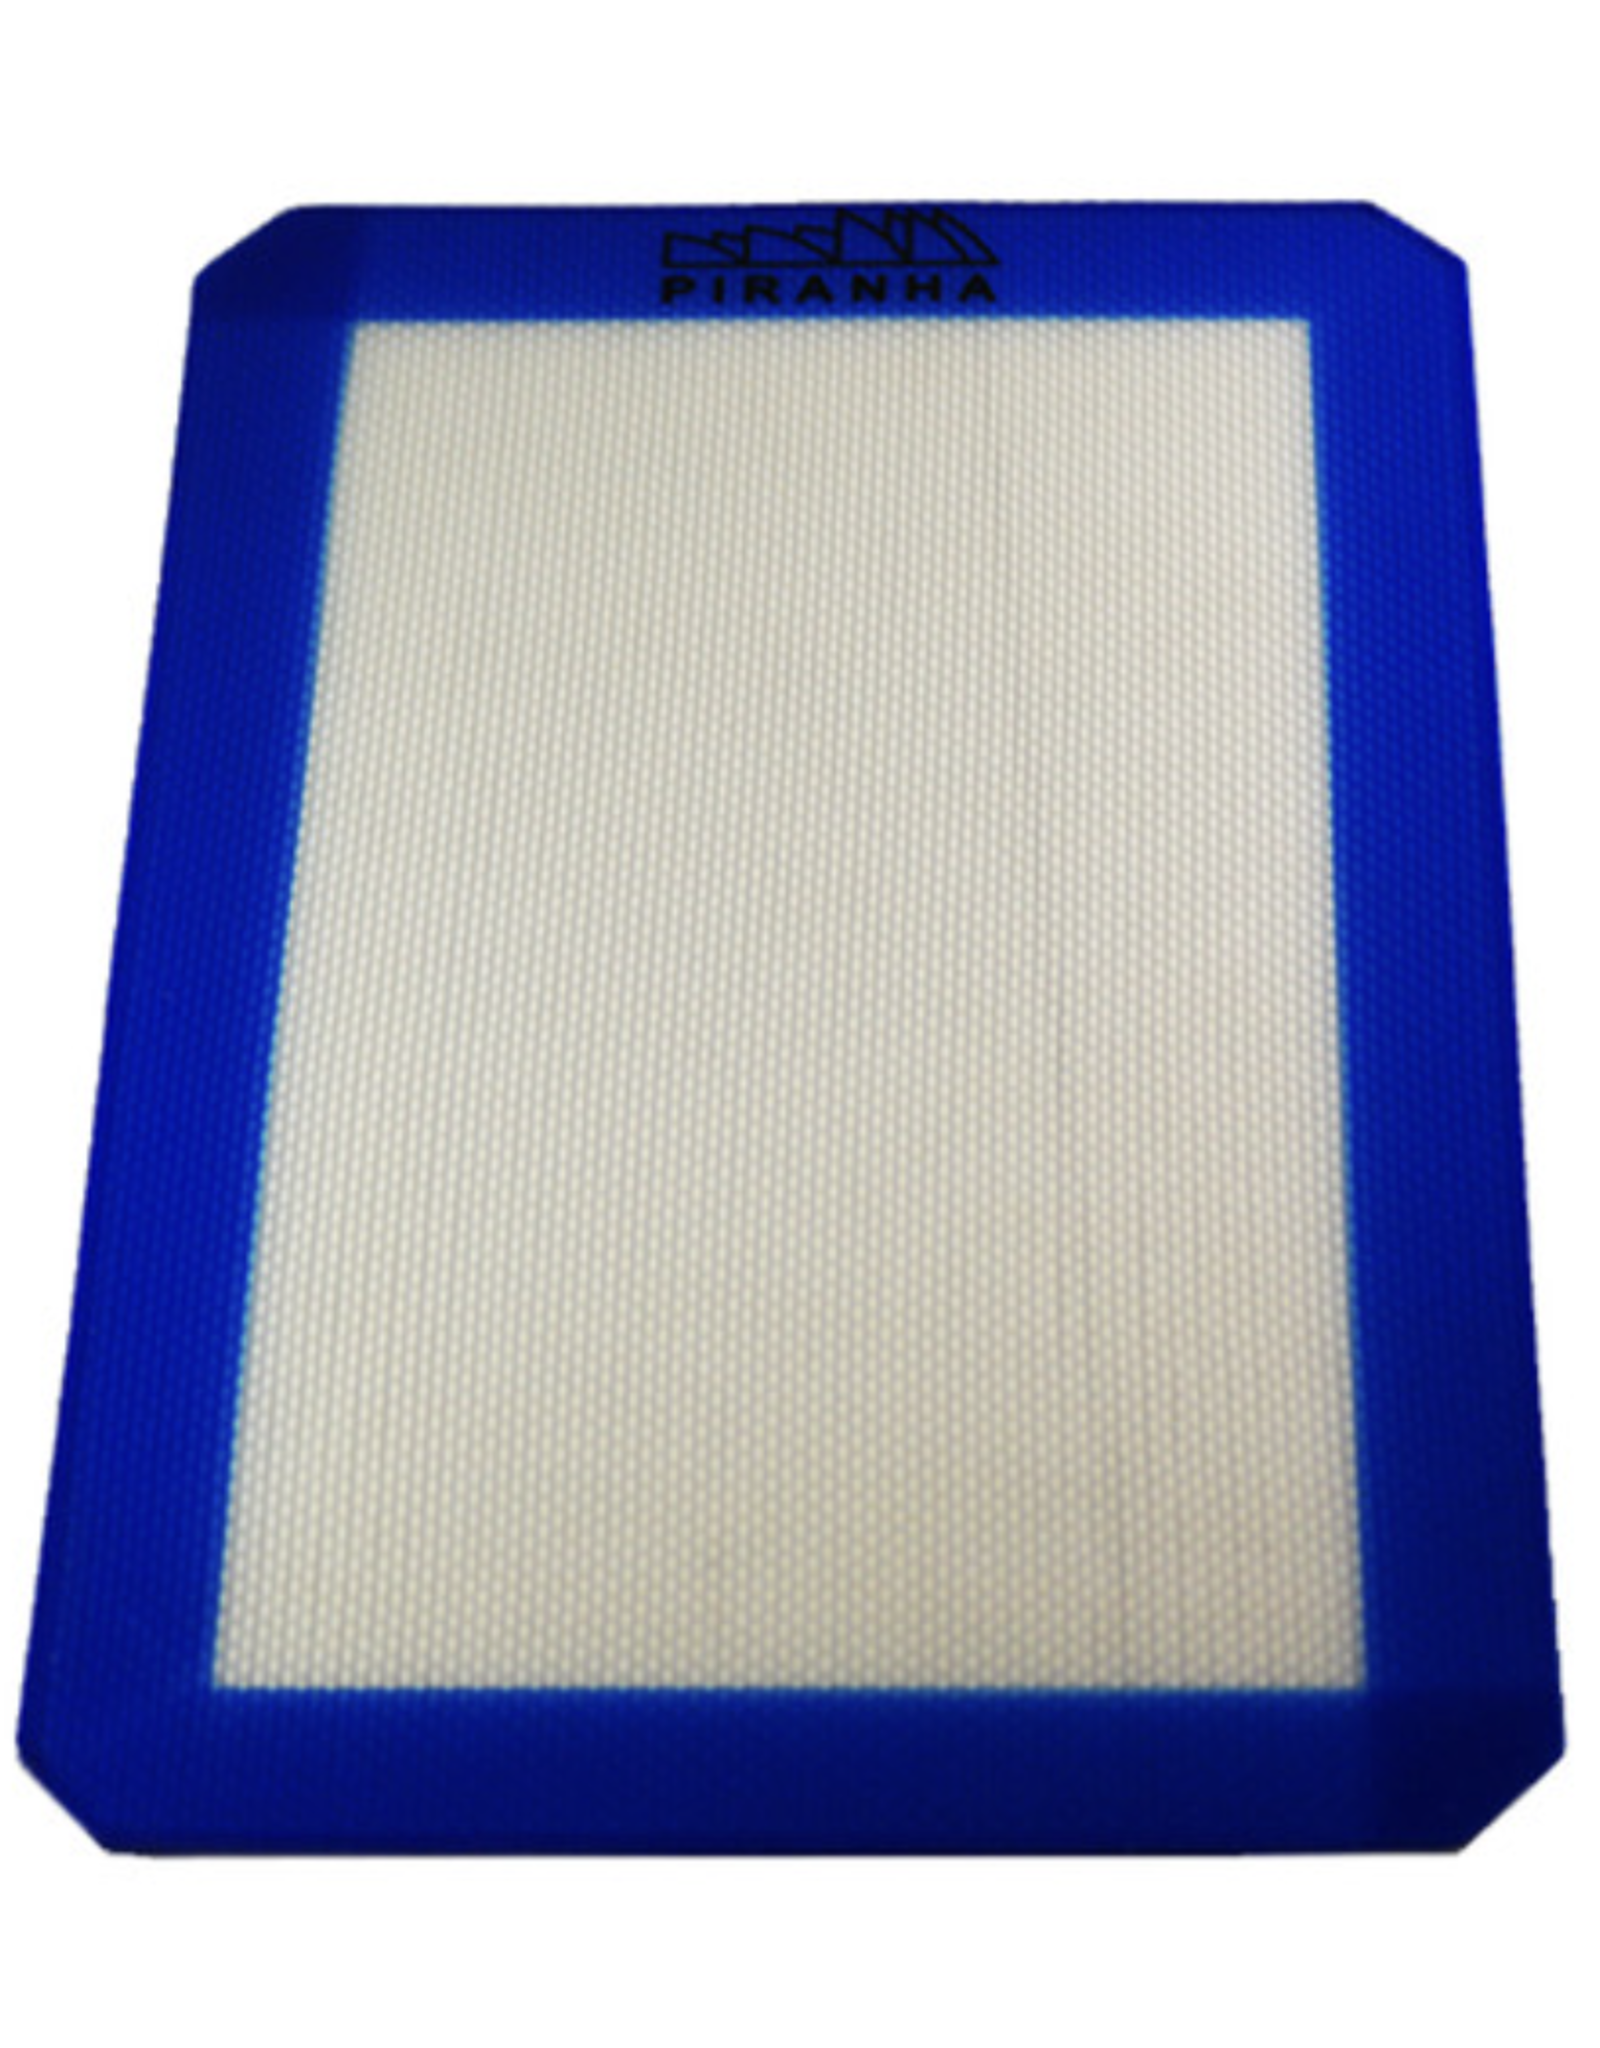 Blue & White Silicone Dab Mat - 8" x 12"